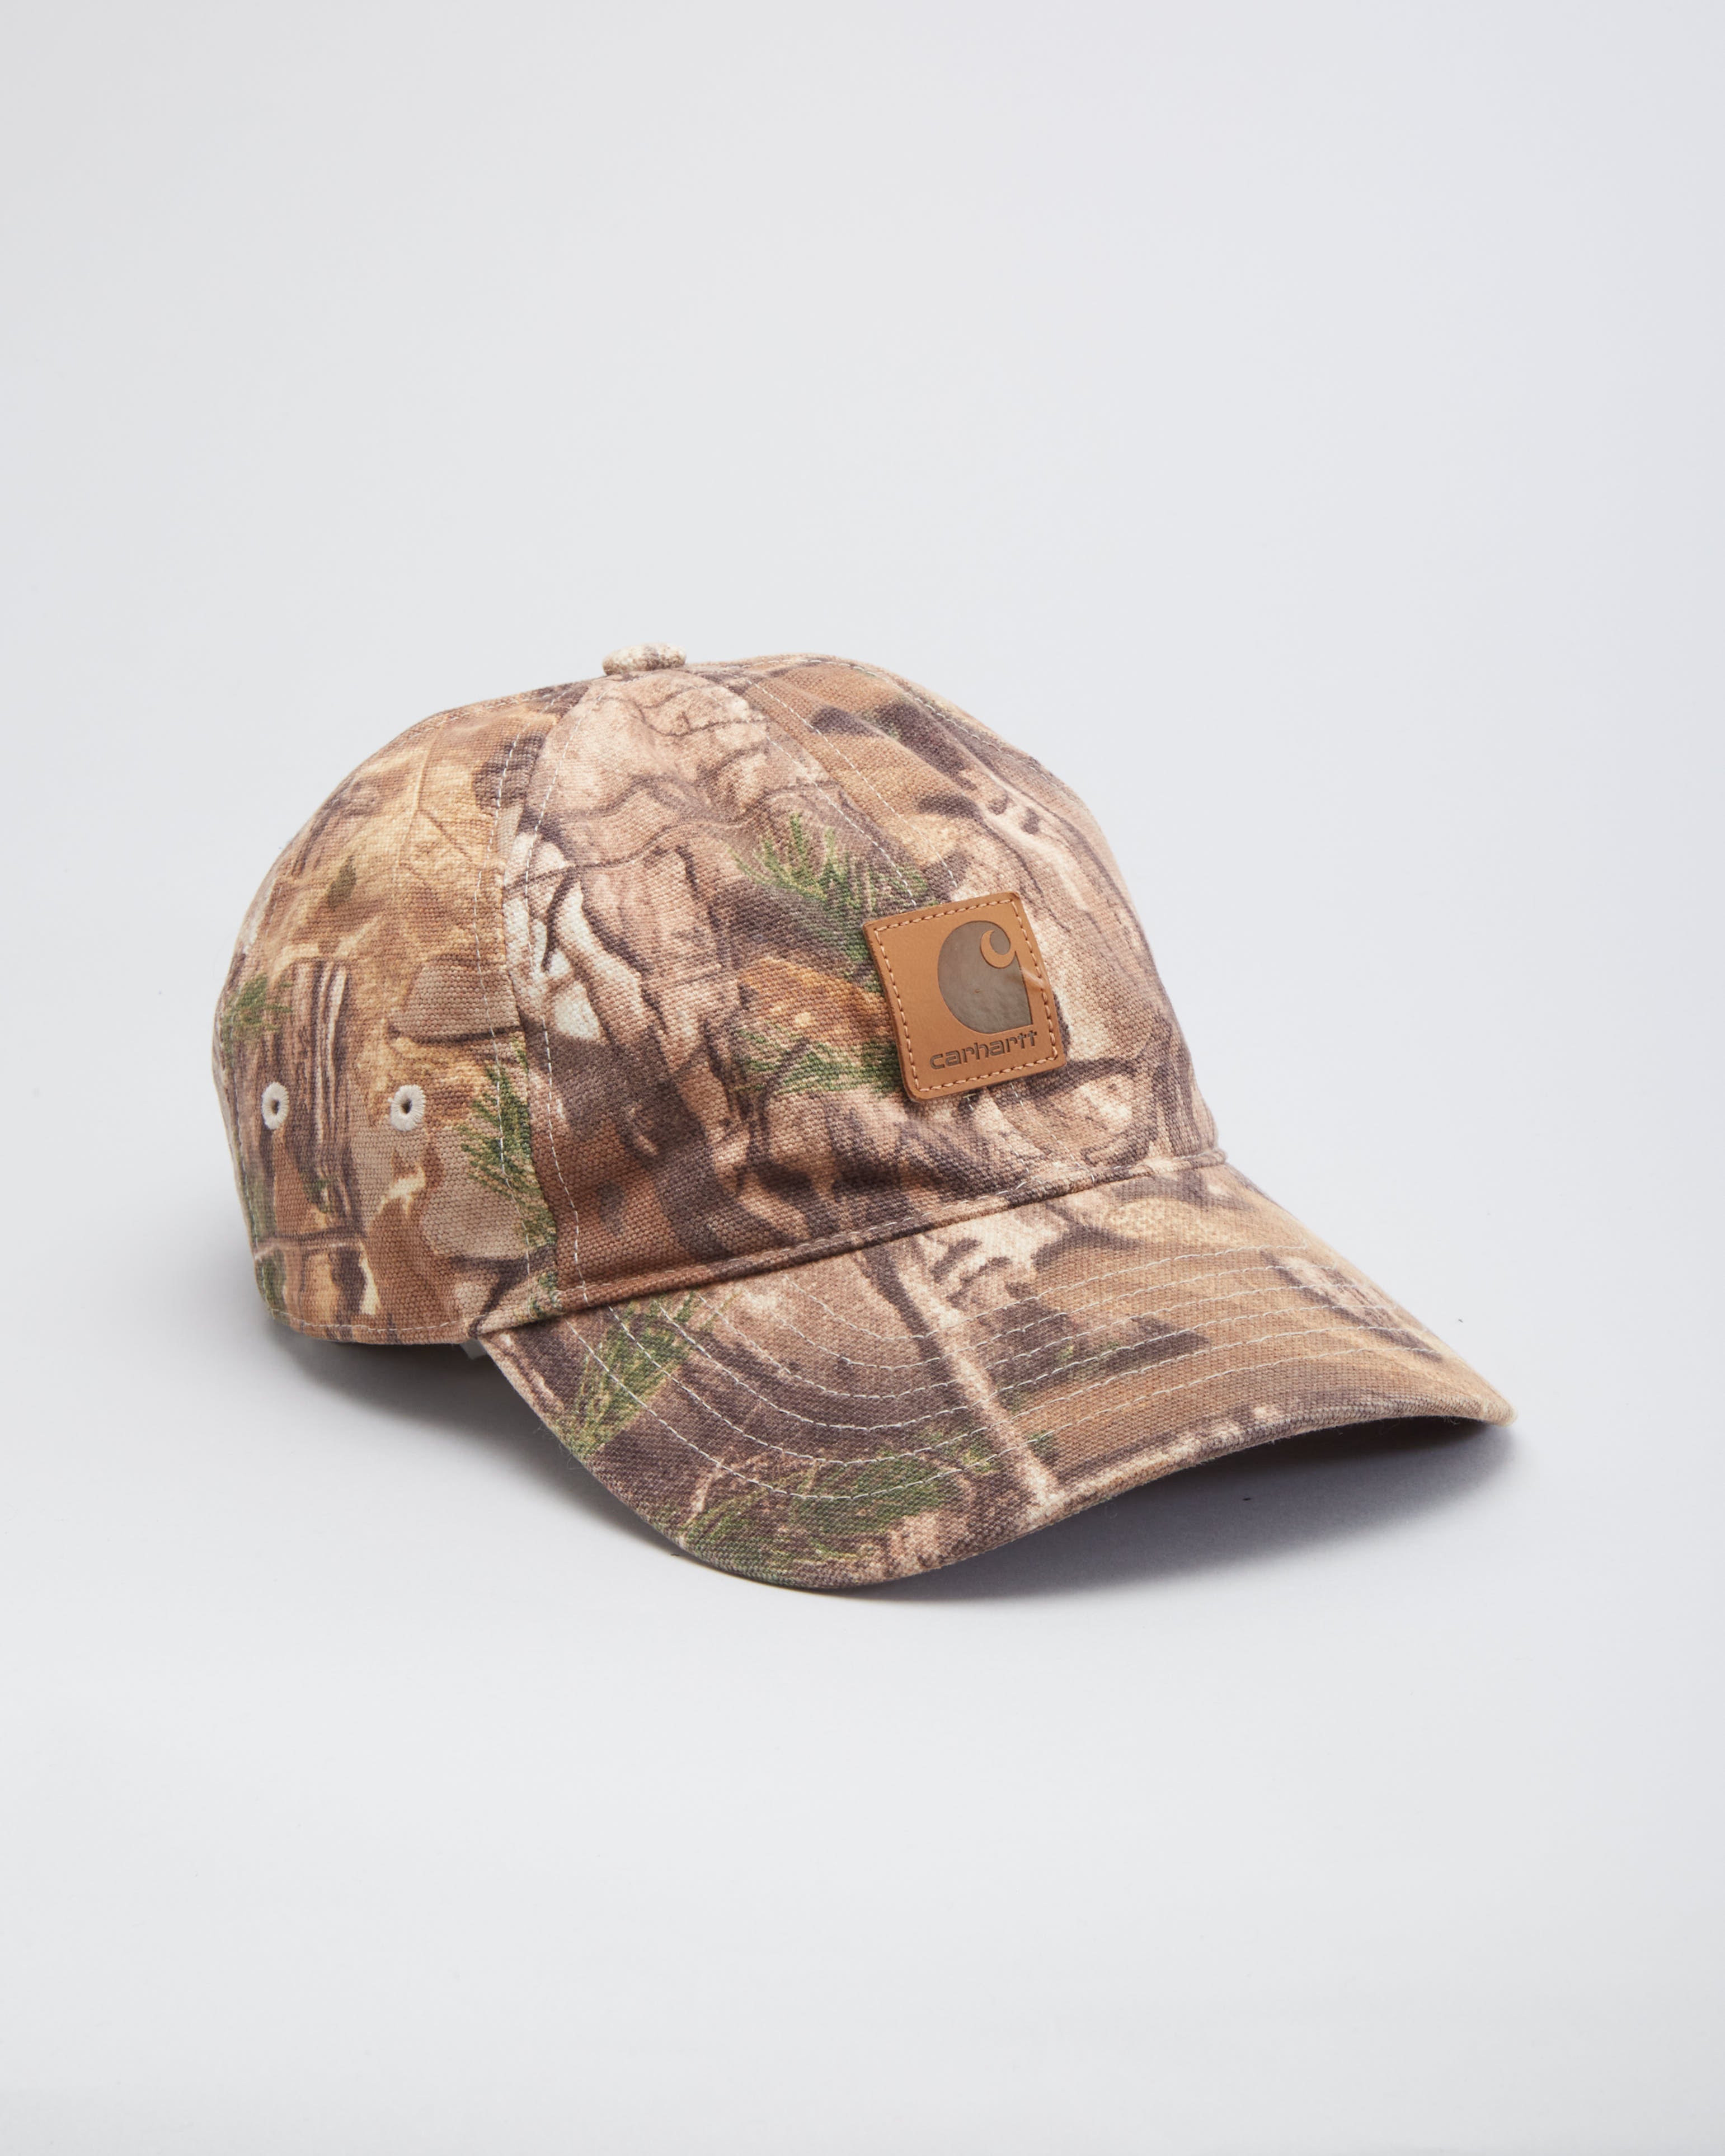 Carhartt Camouflage Baseball Cap / Hat